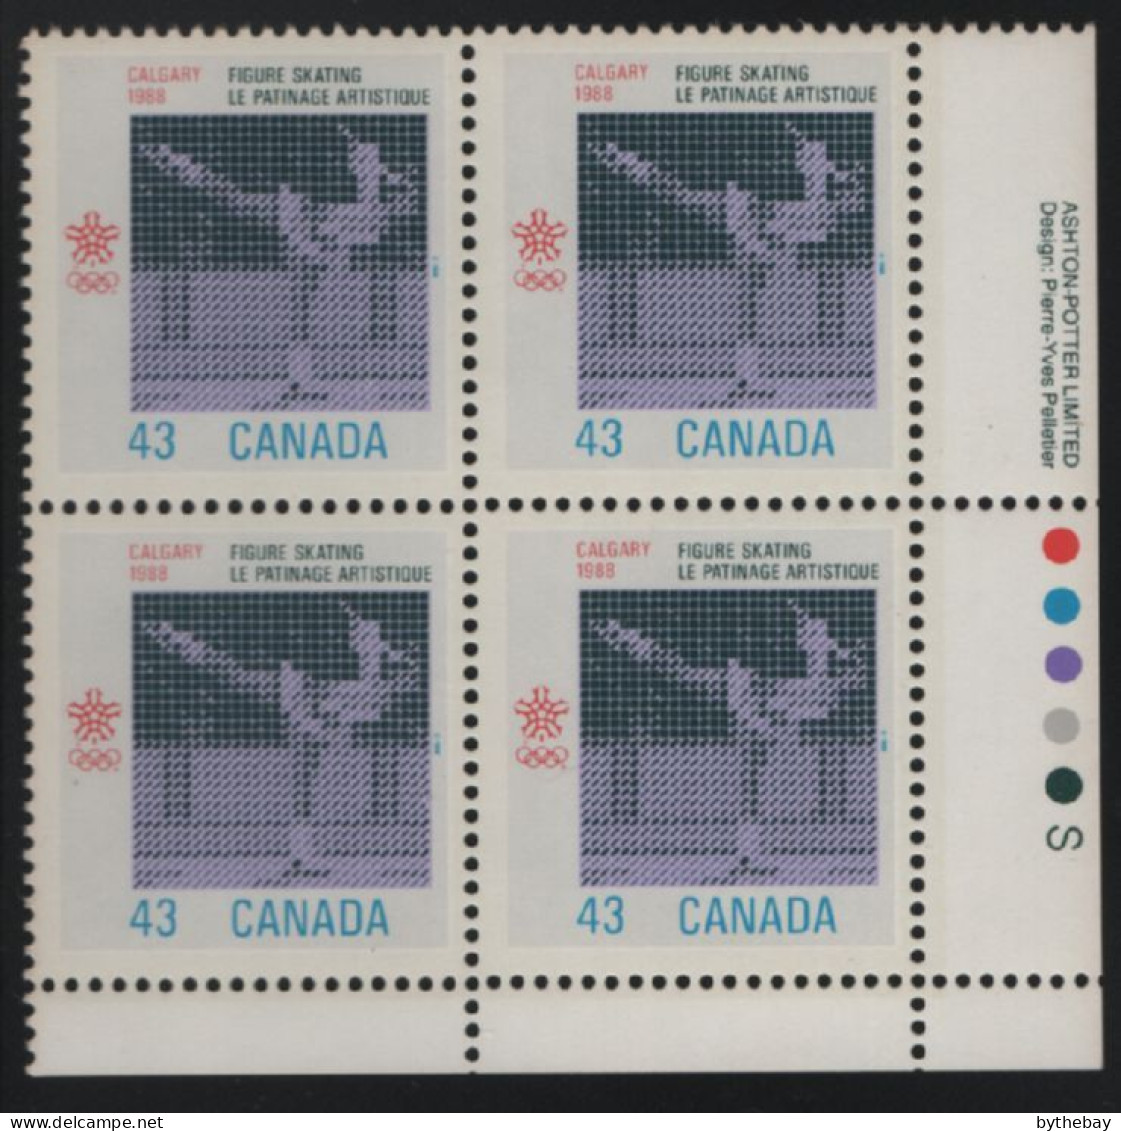 Canada 1988 MNH Sc 1197 47c Figure Skating LR Plate Block - Plate Number & Inscriptions